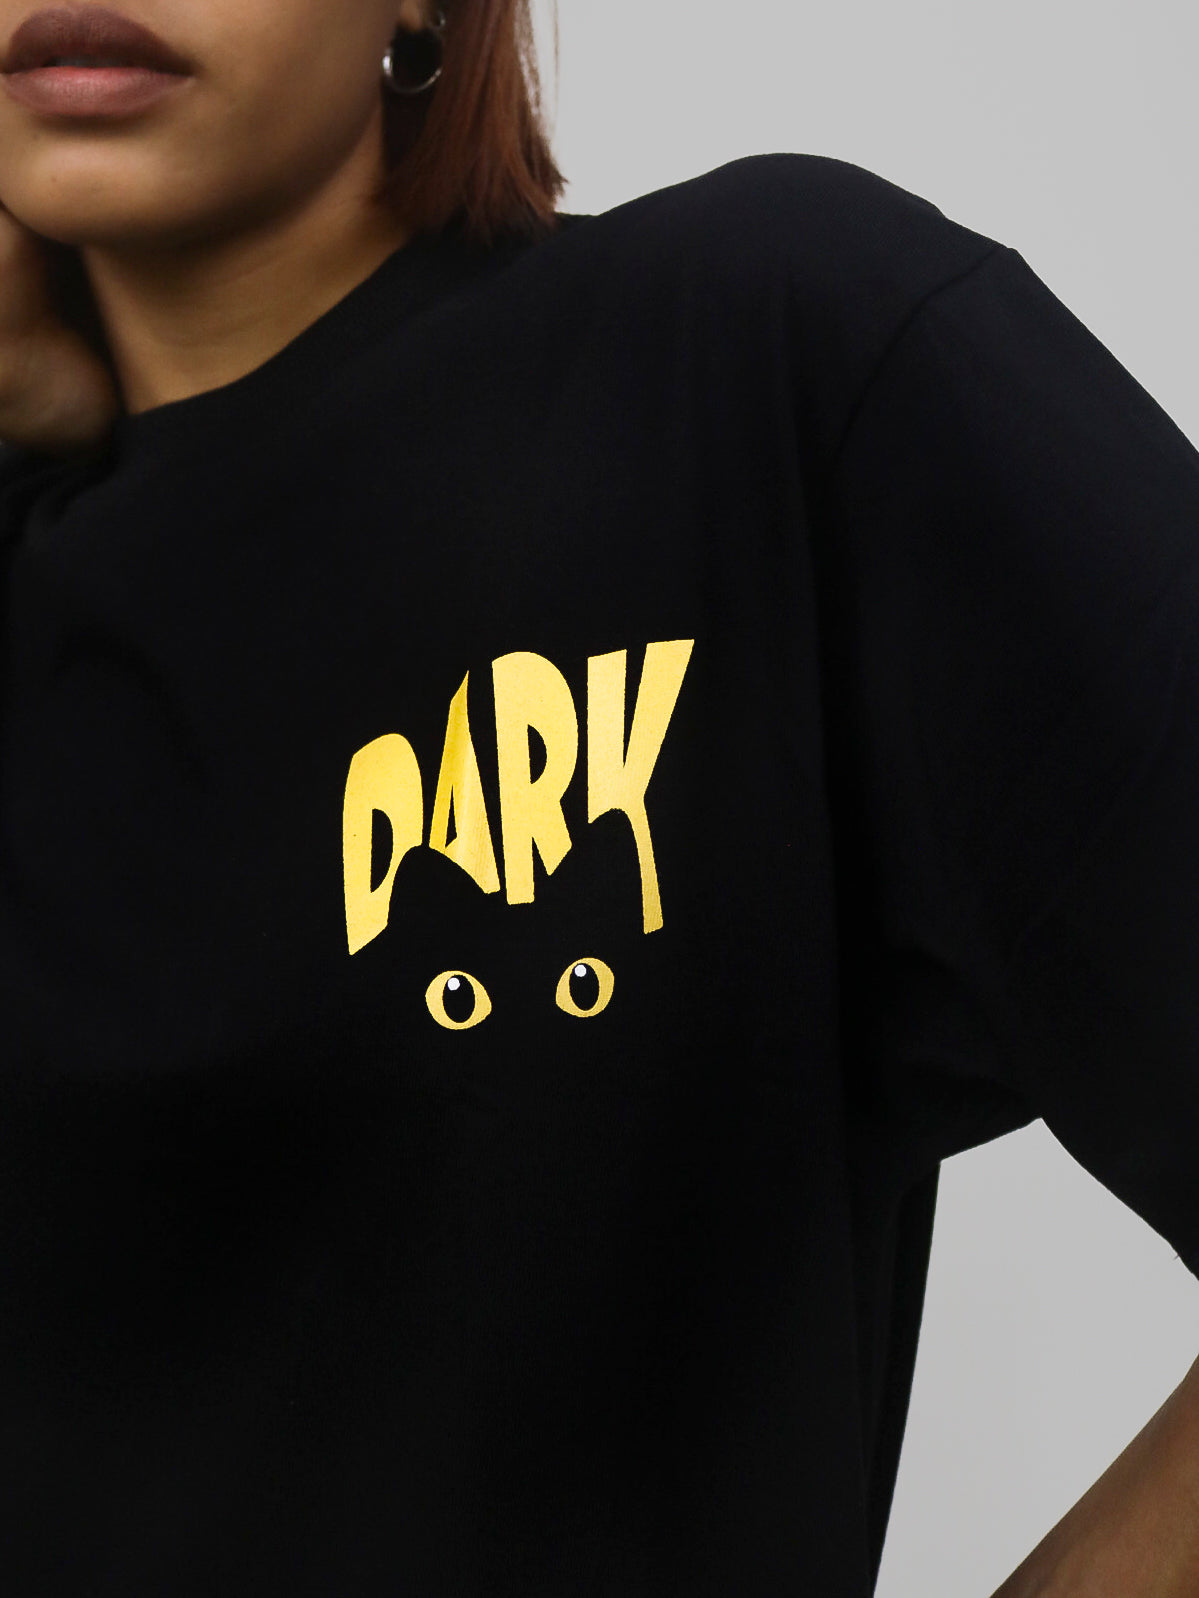 Dark Cat Oversized 100% Cotton Vantablack Printed Unisex T-Shirt